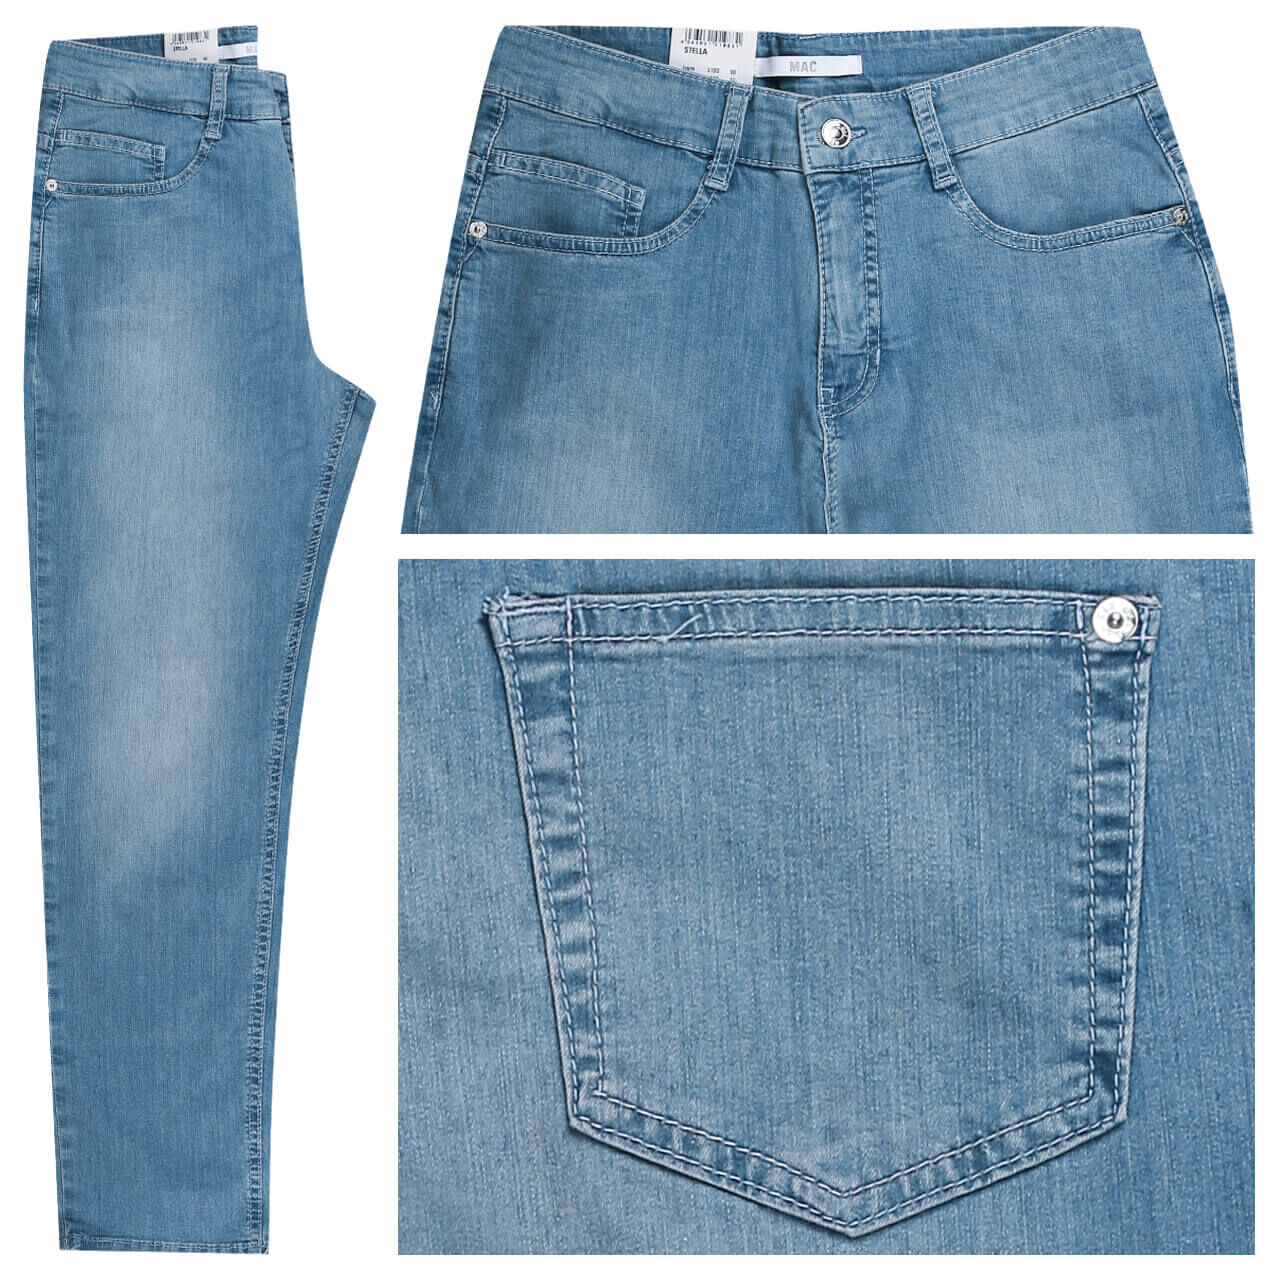 MAC Jeans Stella für Damen in Hellblau, FarbNr.: D499